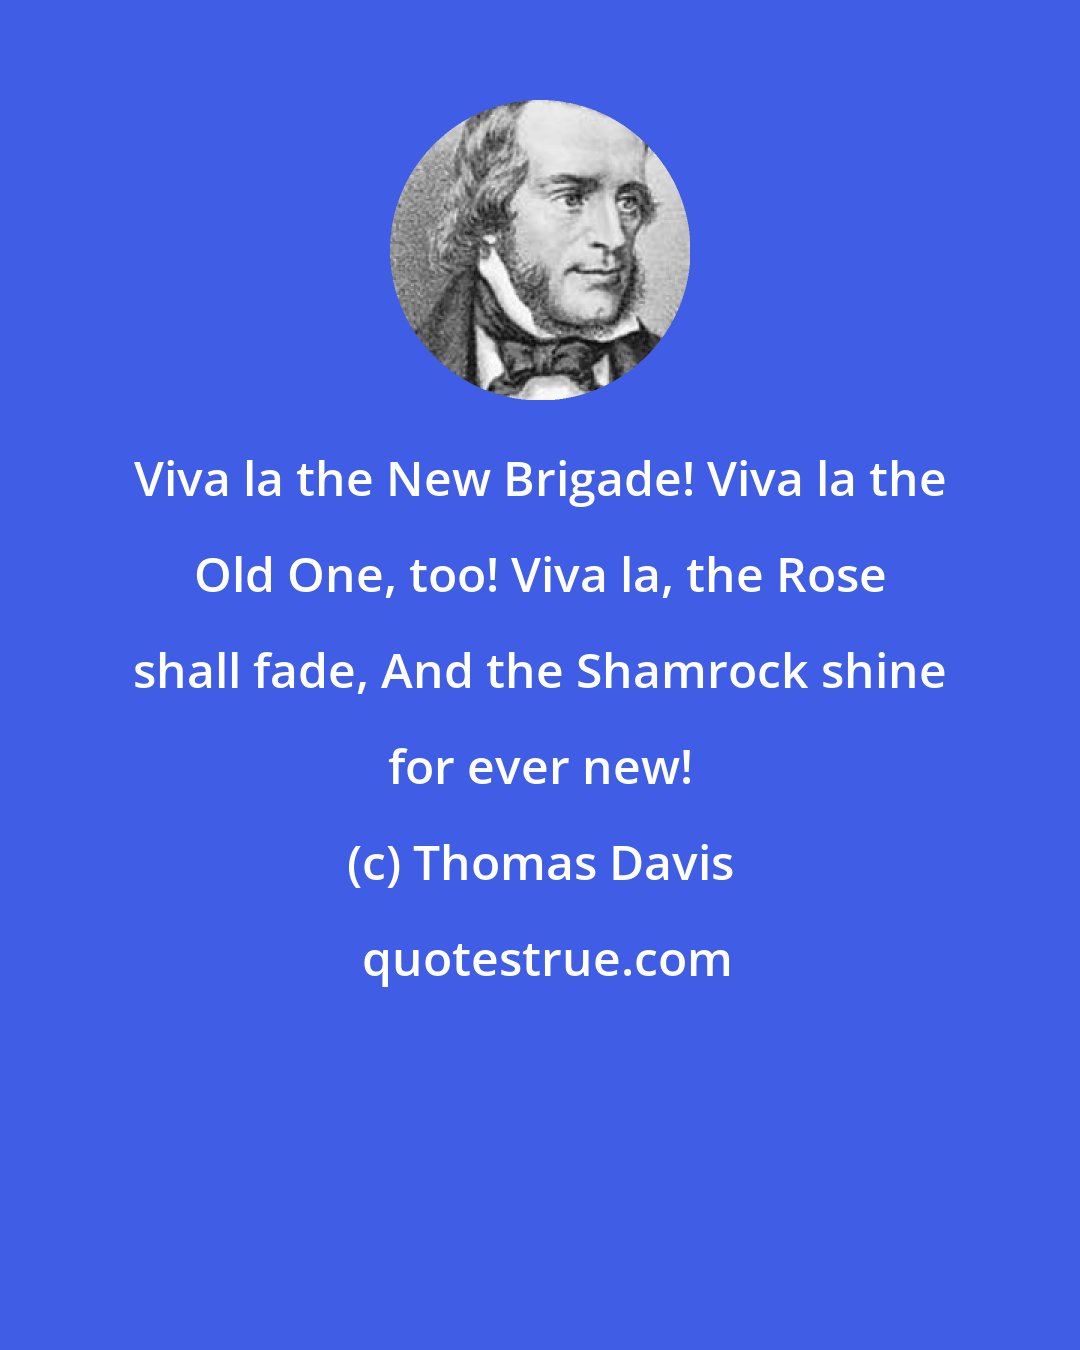 Thomas Davis: Viva la the New Brigade! Viva la the Old One, too! Viva la, the Rose shall fade, And the Shamrock shine for ever new!